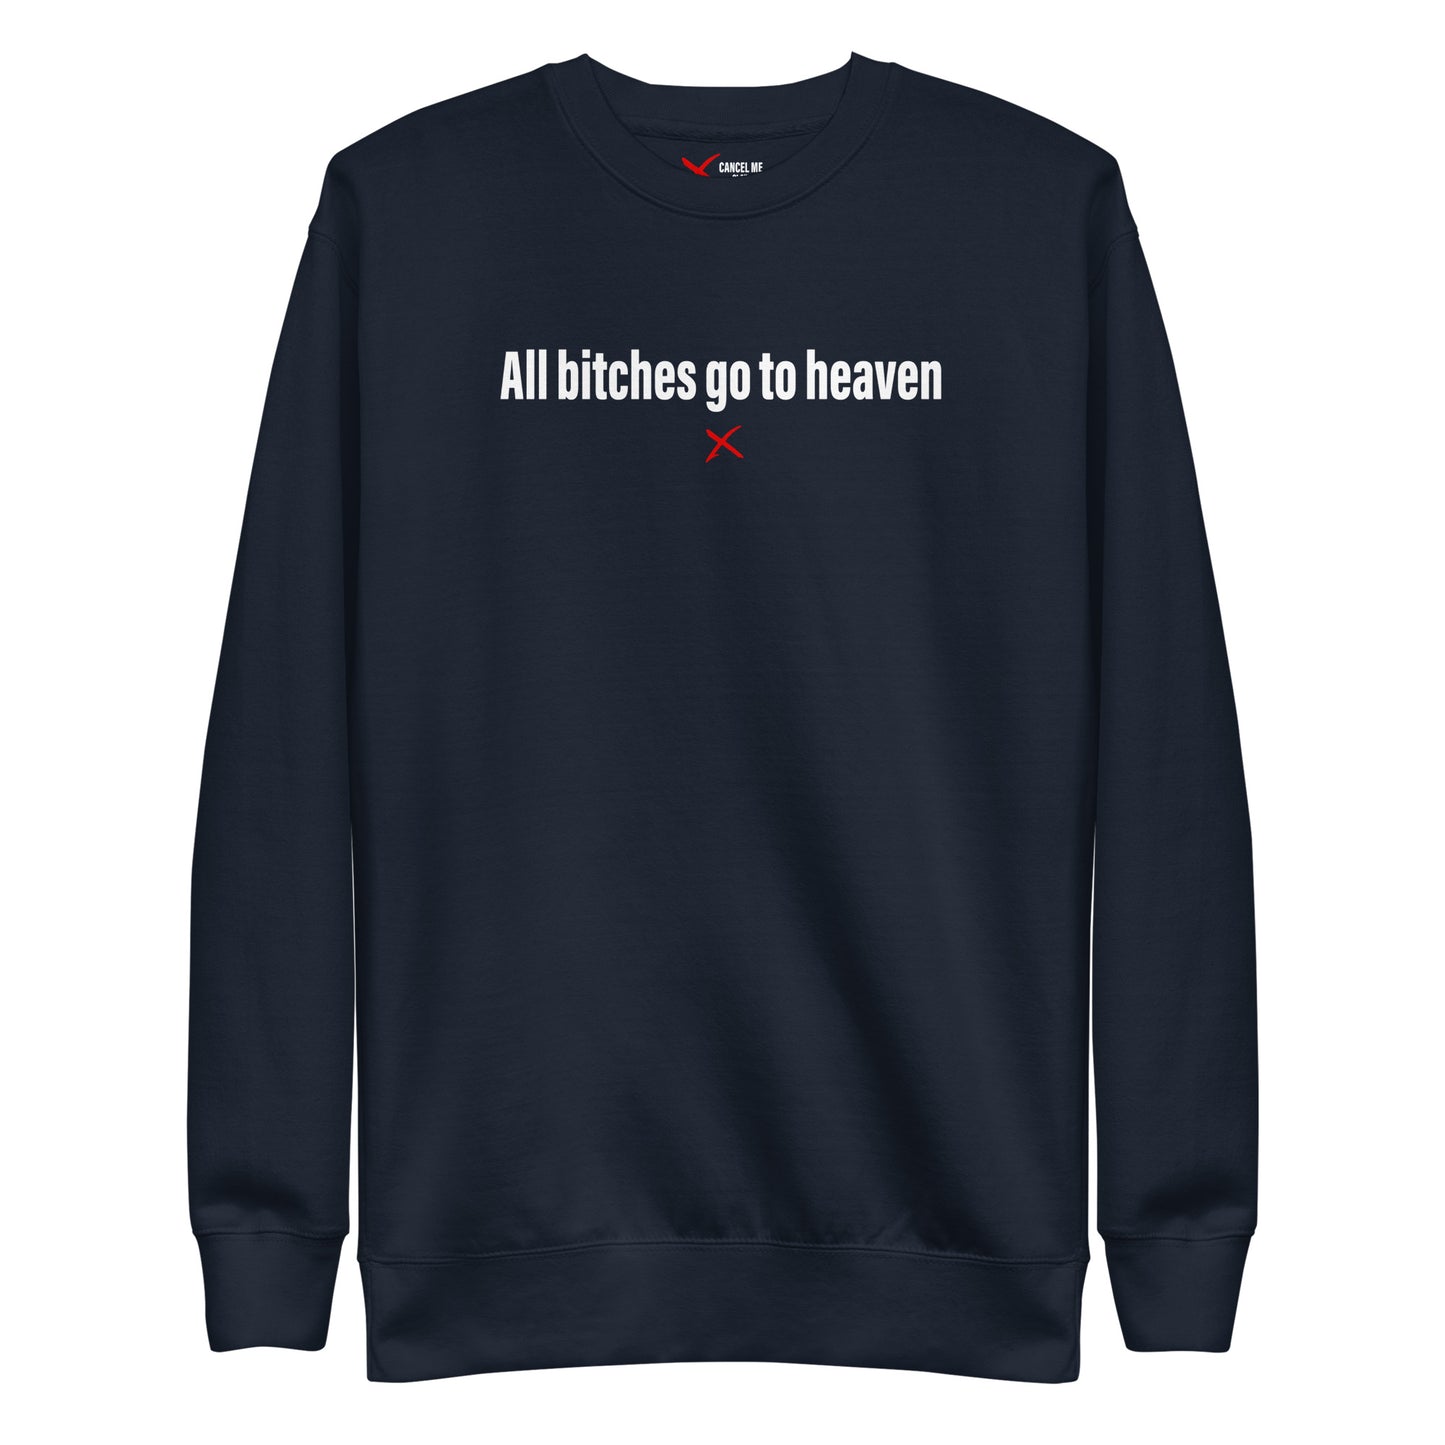 All bitches go to heaven - Sweatshirt